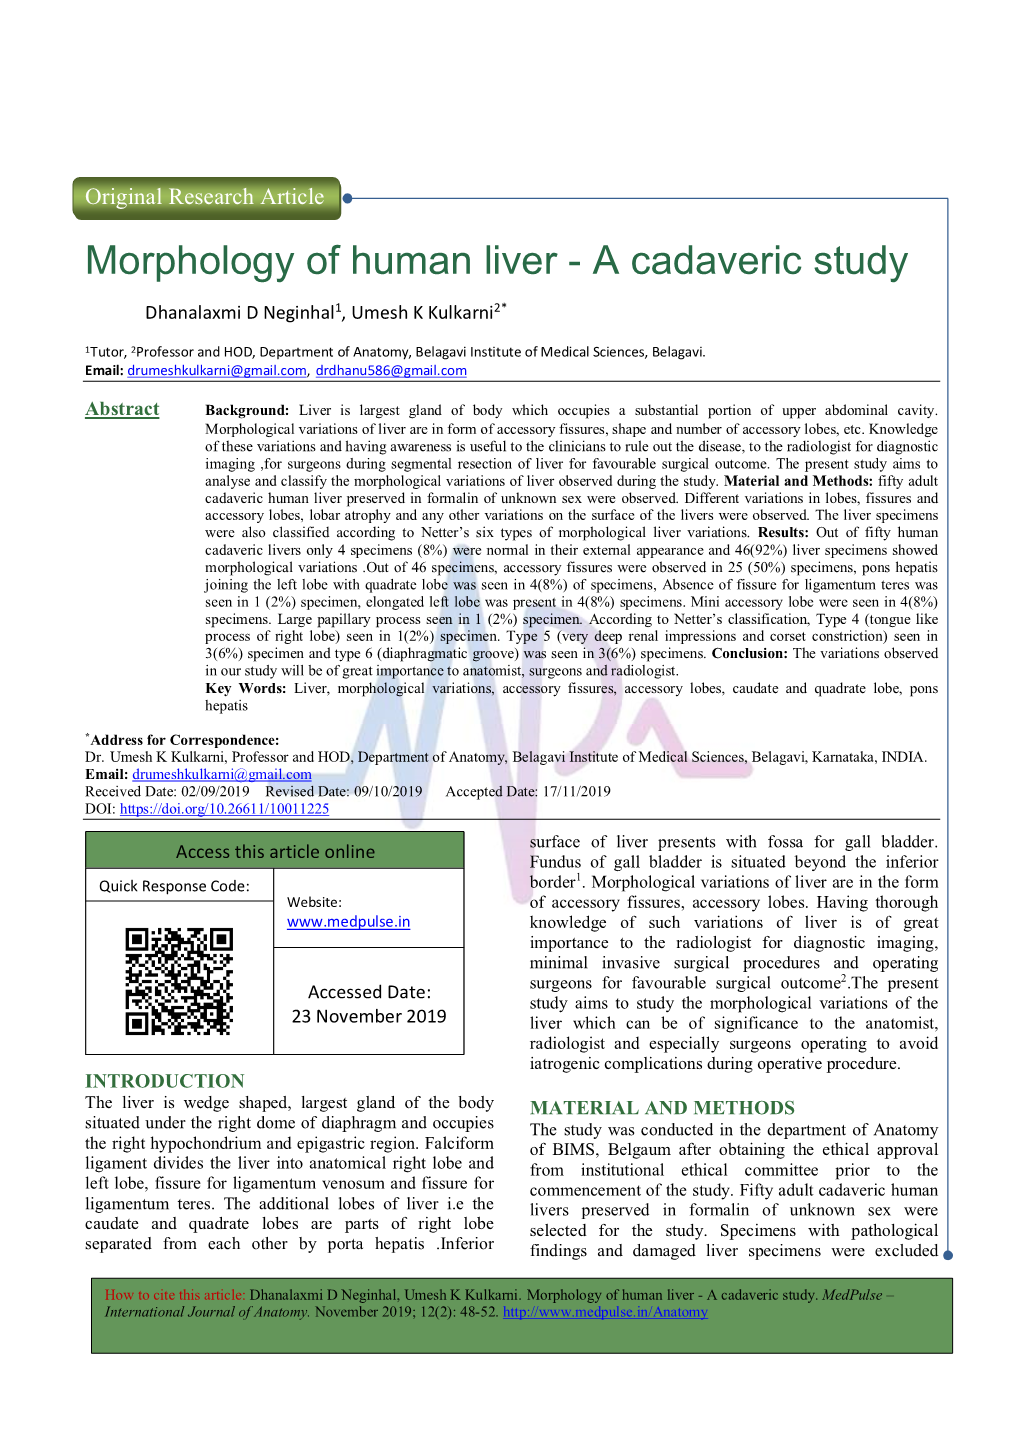 Morphology of Human Liver - a Cadaveric Study